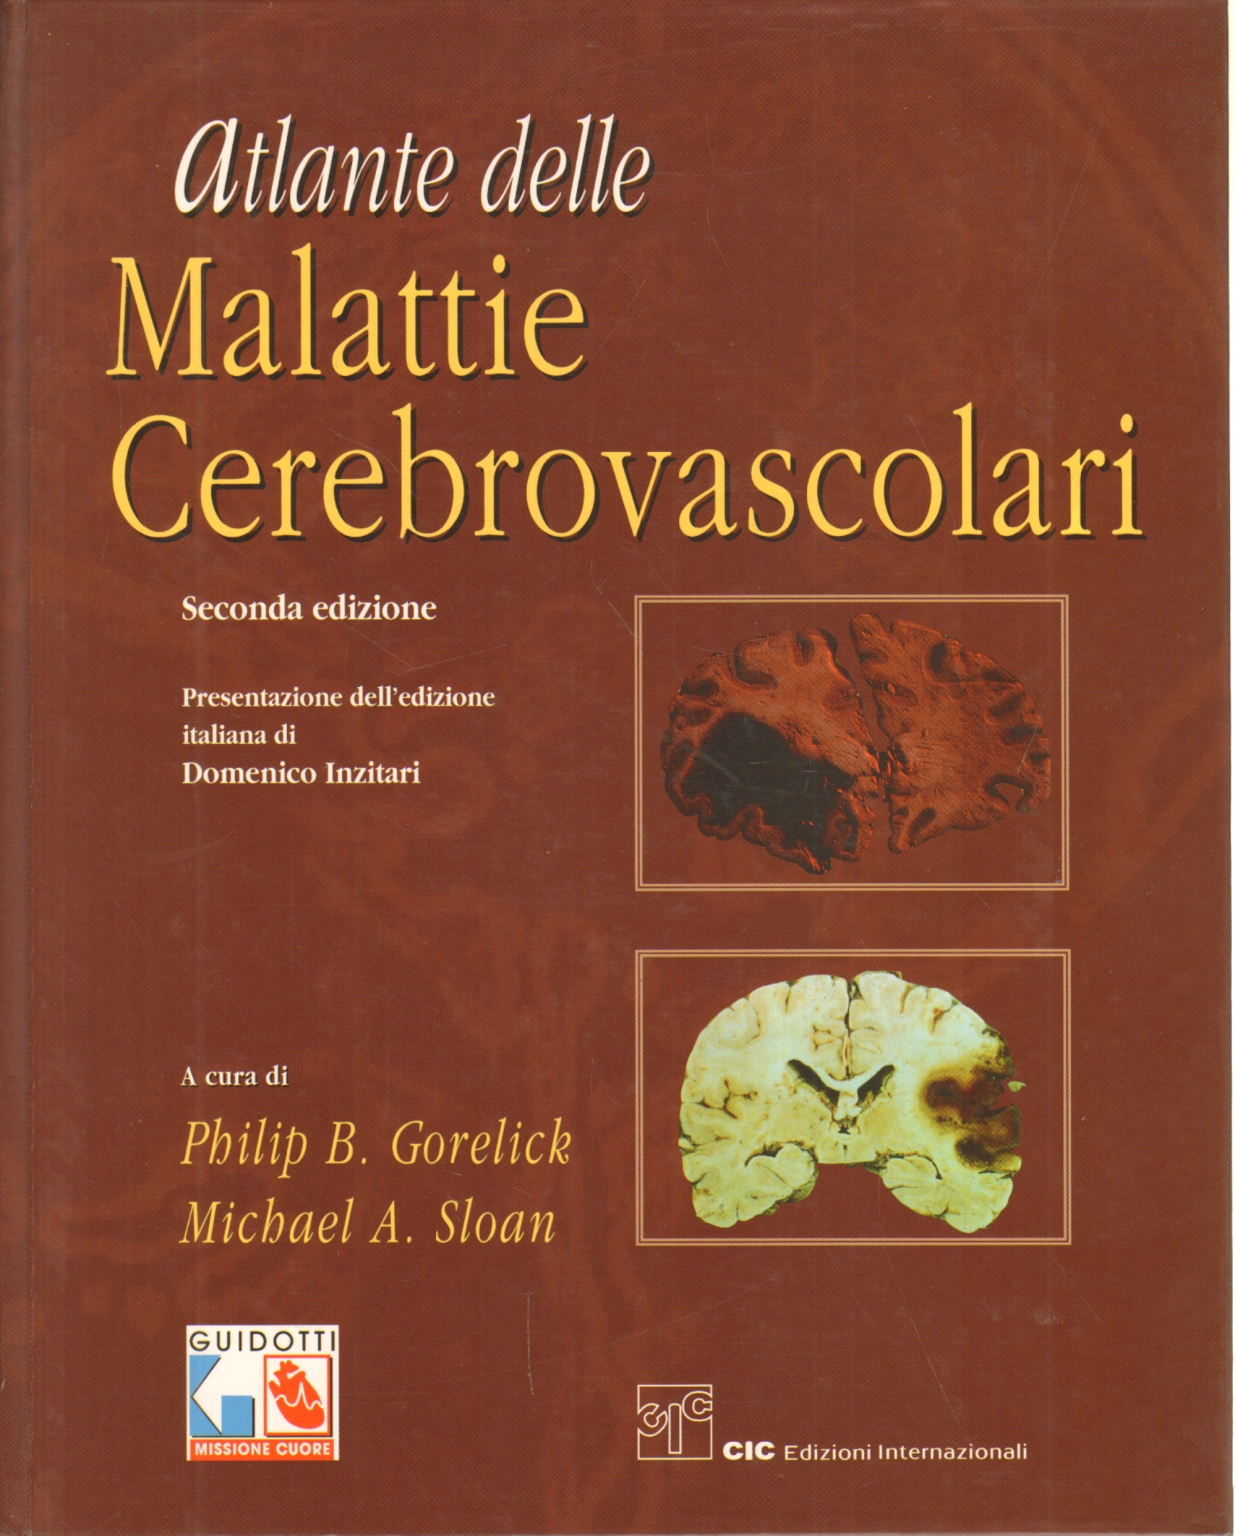 Atlas of cerebrovascular disease, Philip B. Gorelick and Michael A. Sloan